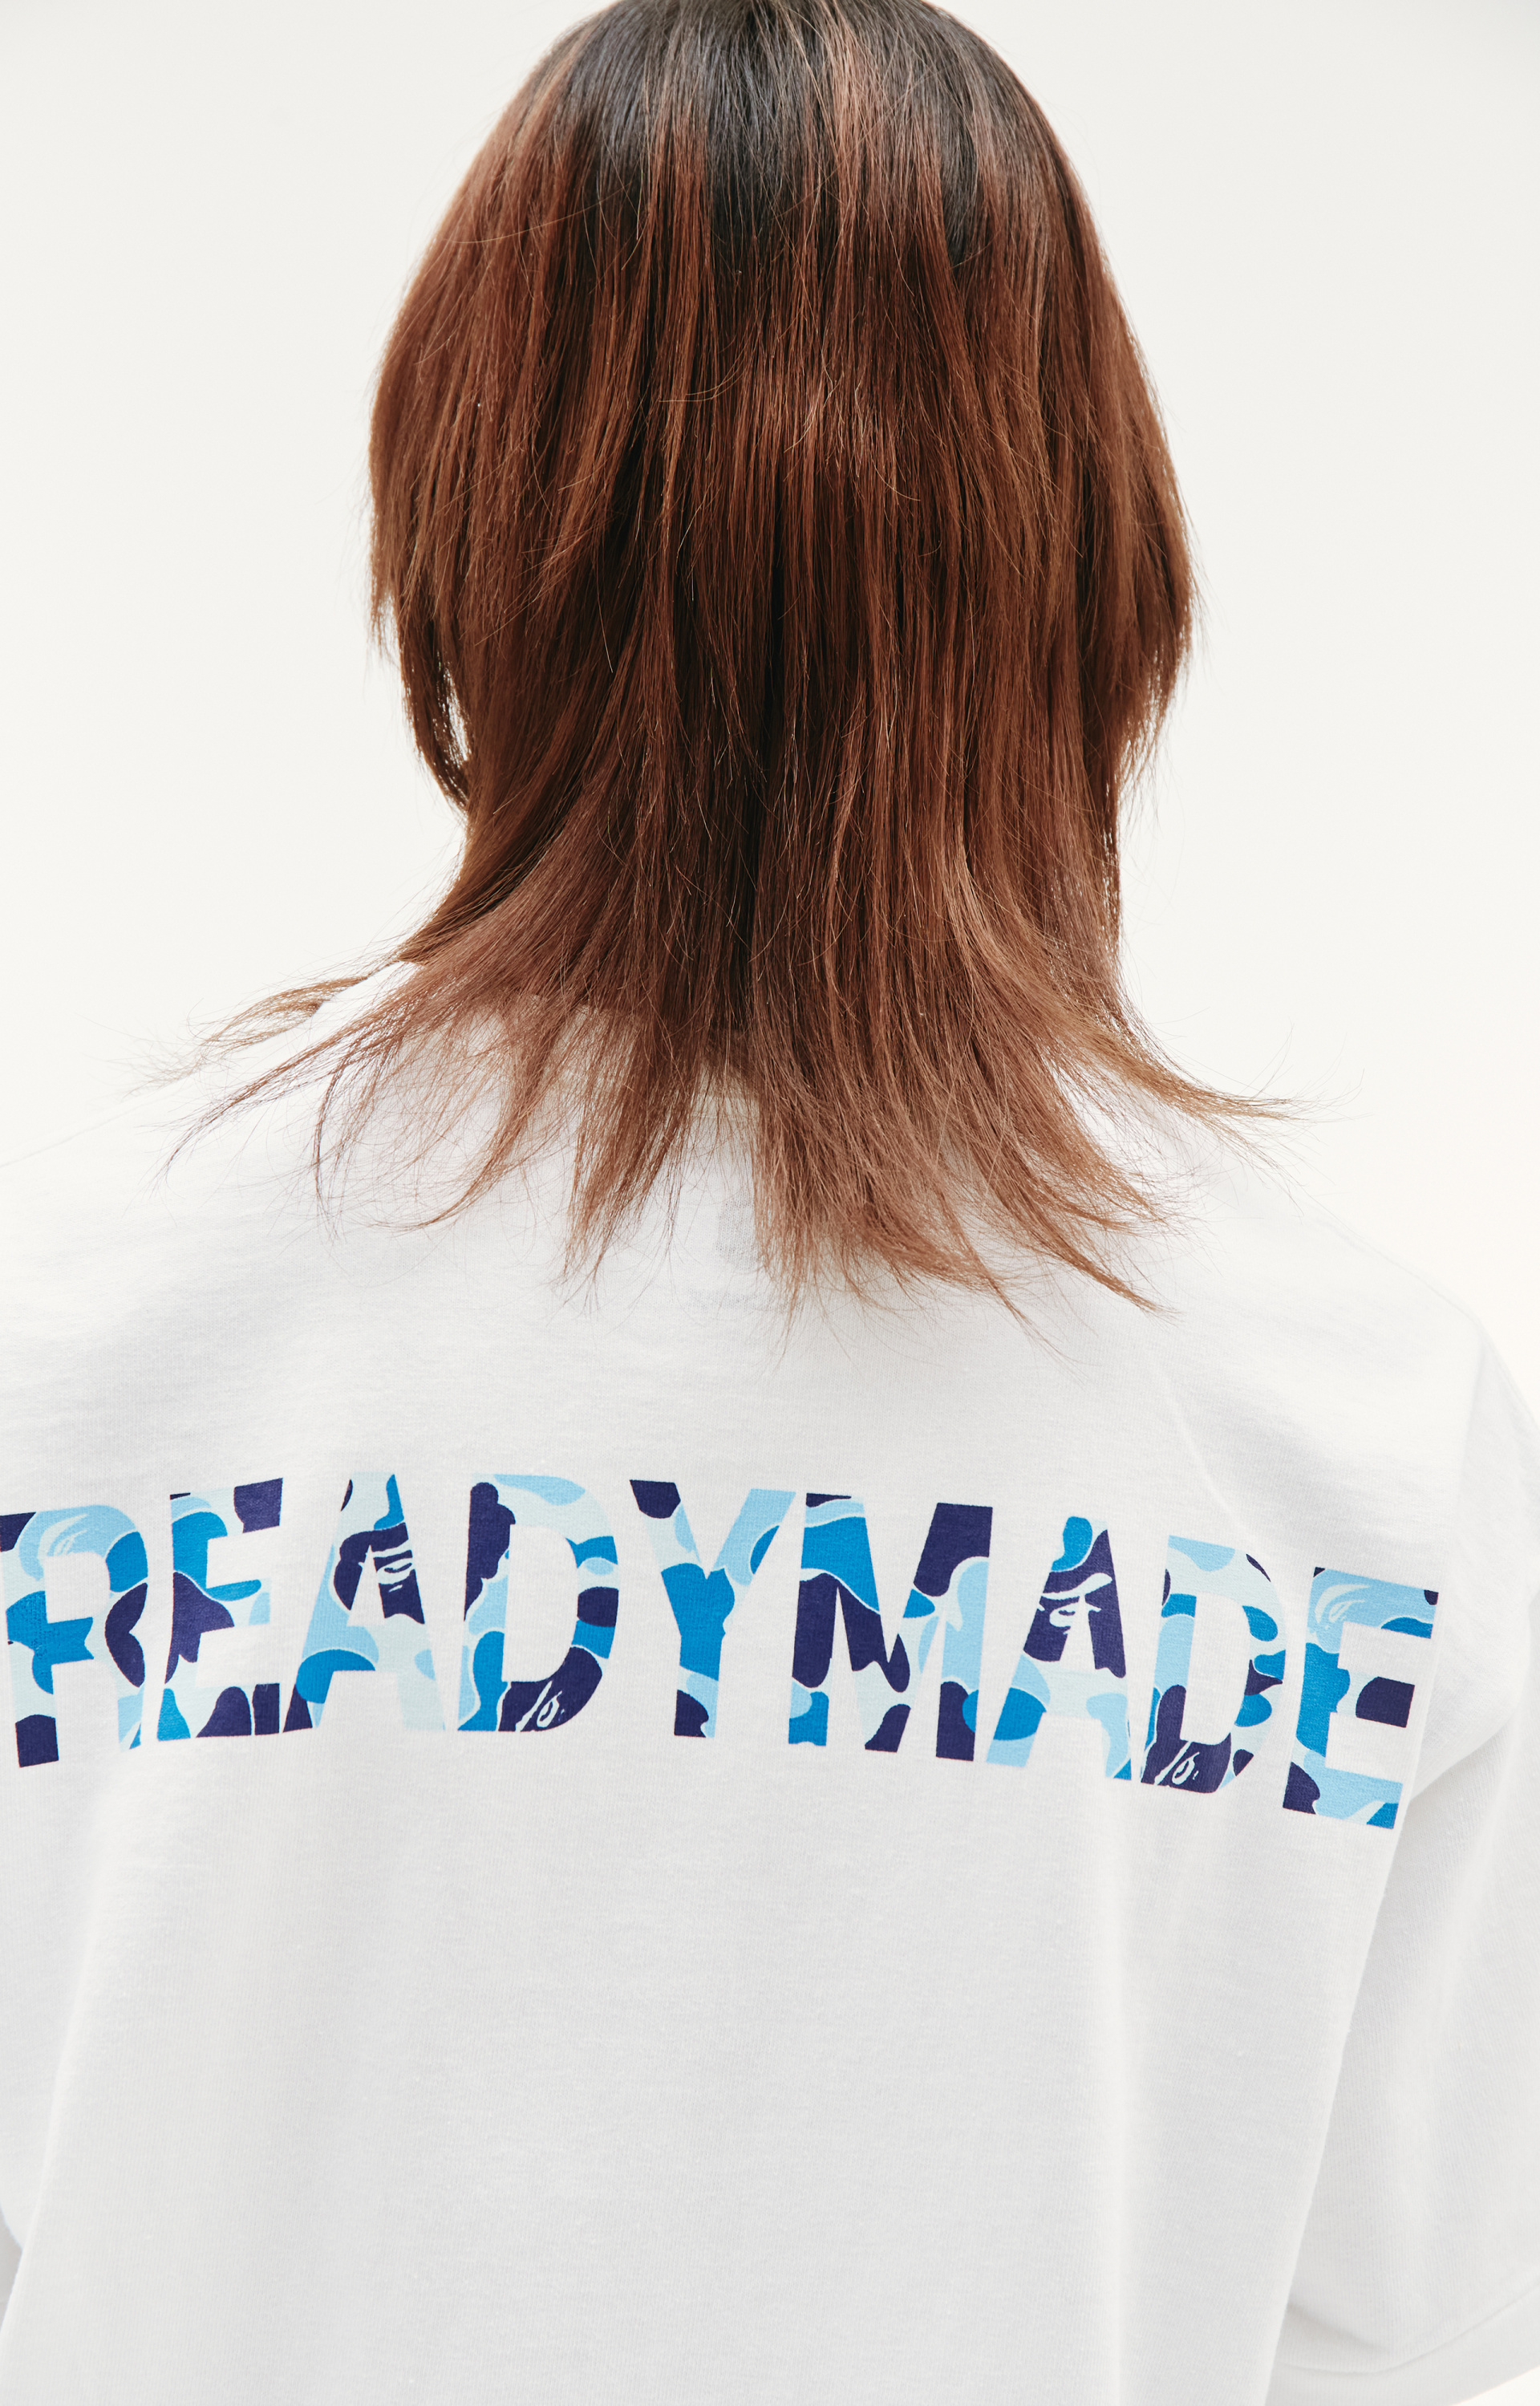 Readymade Readymade x Bape 3 Pack T-shirts